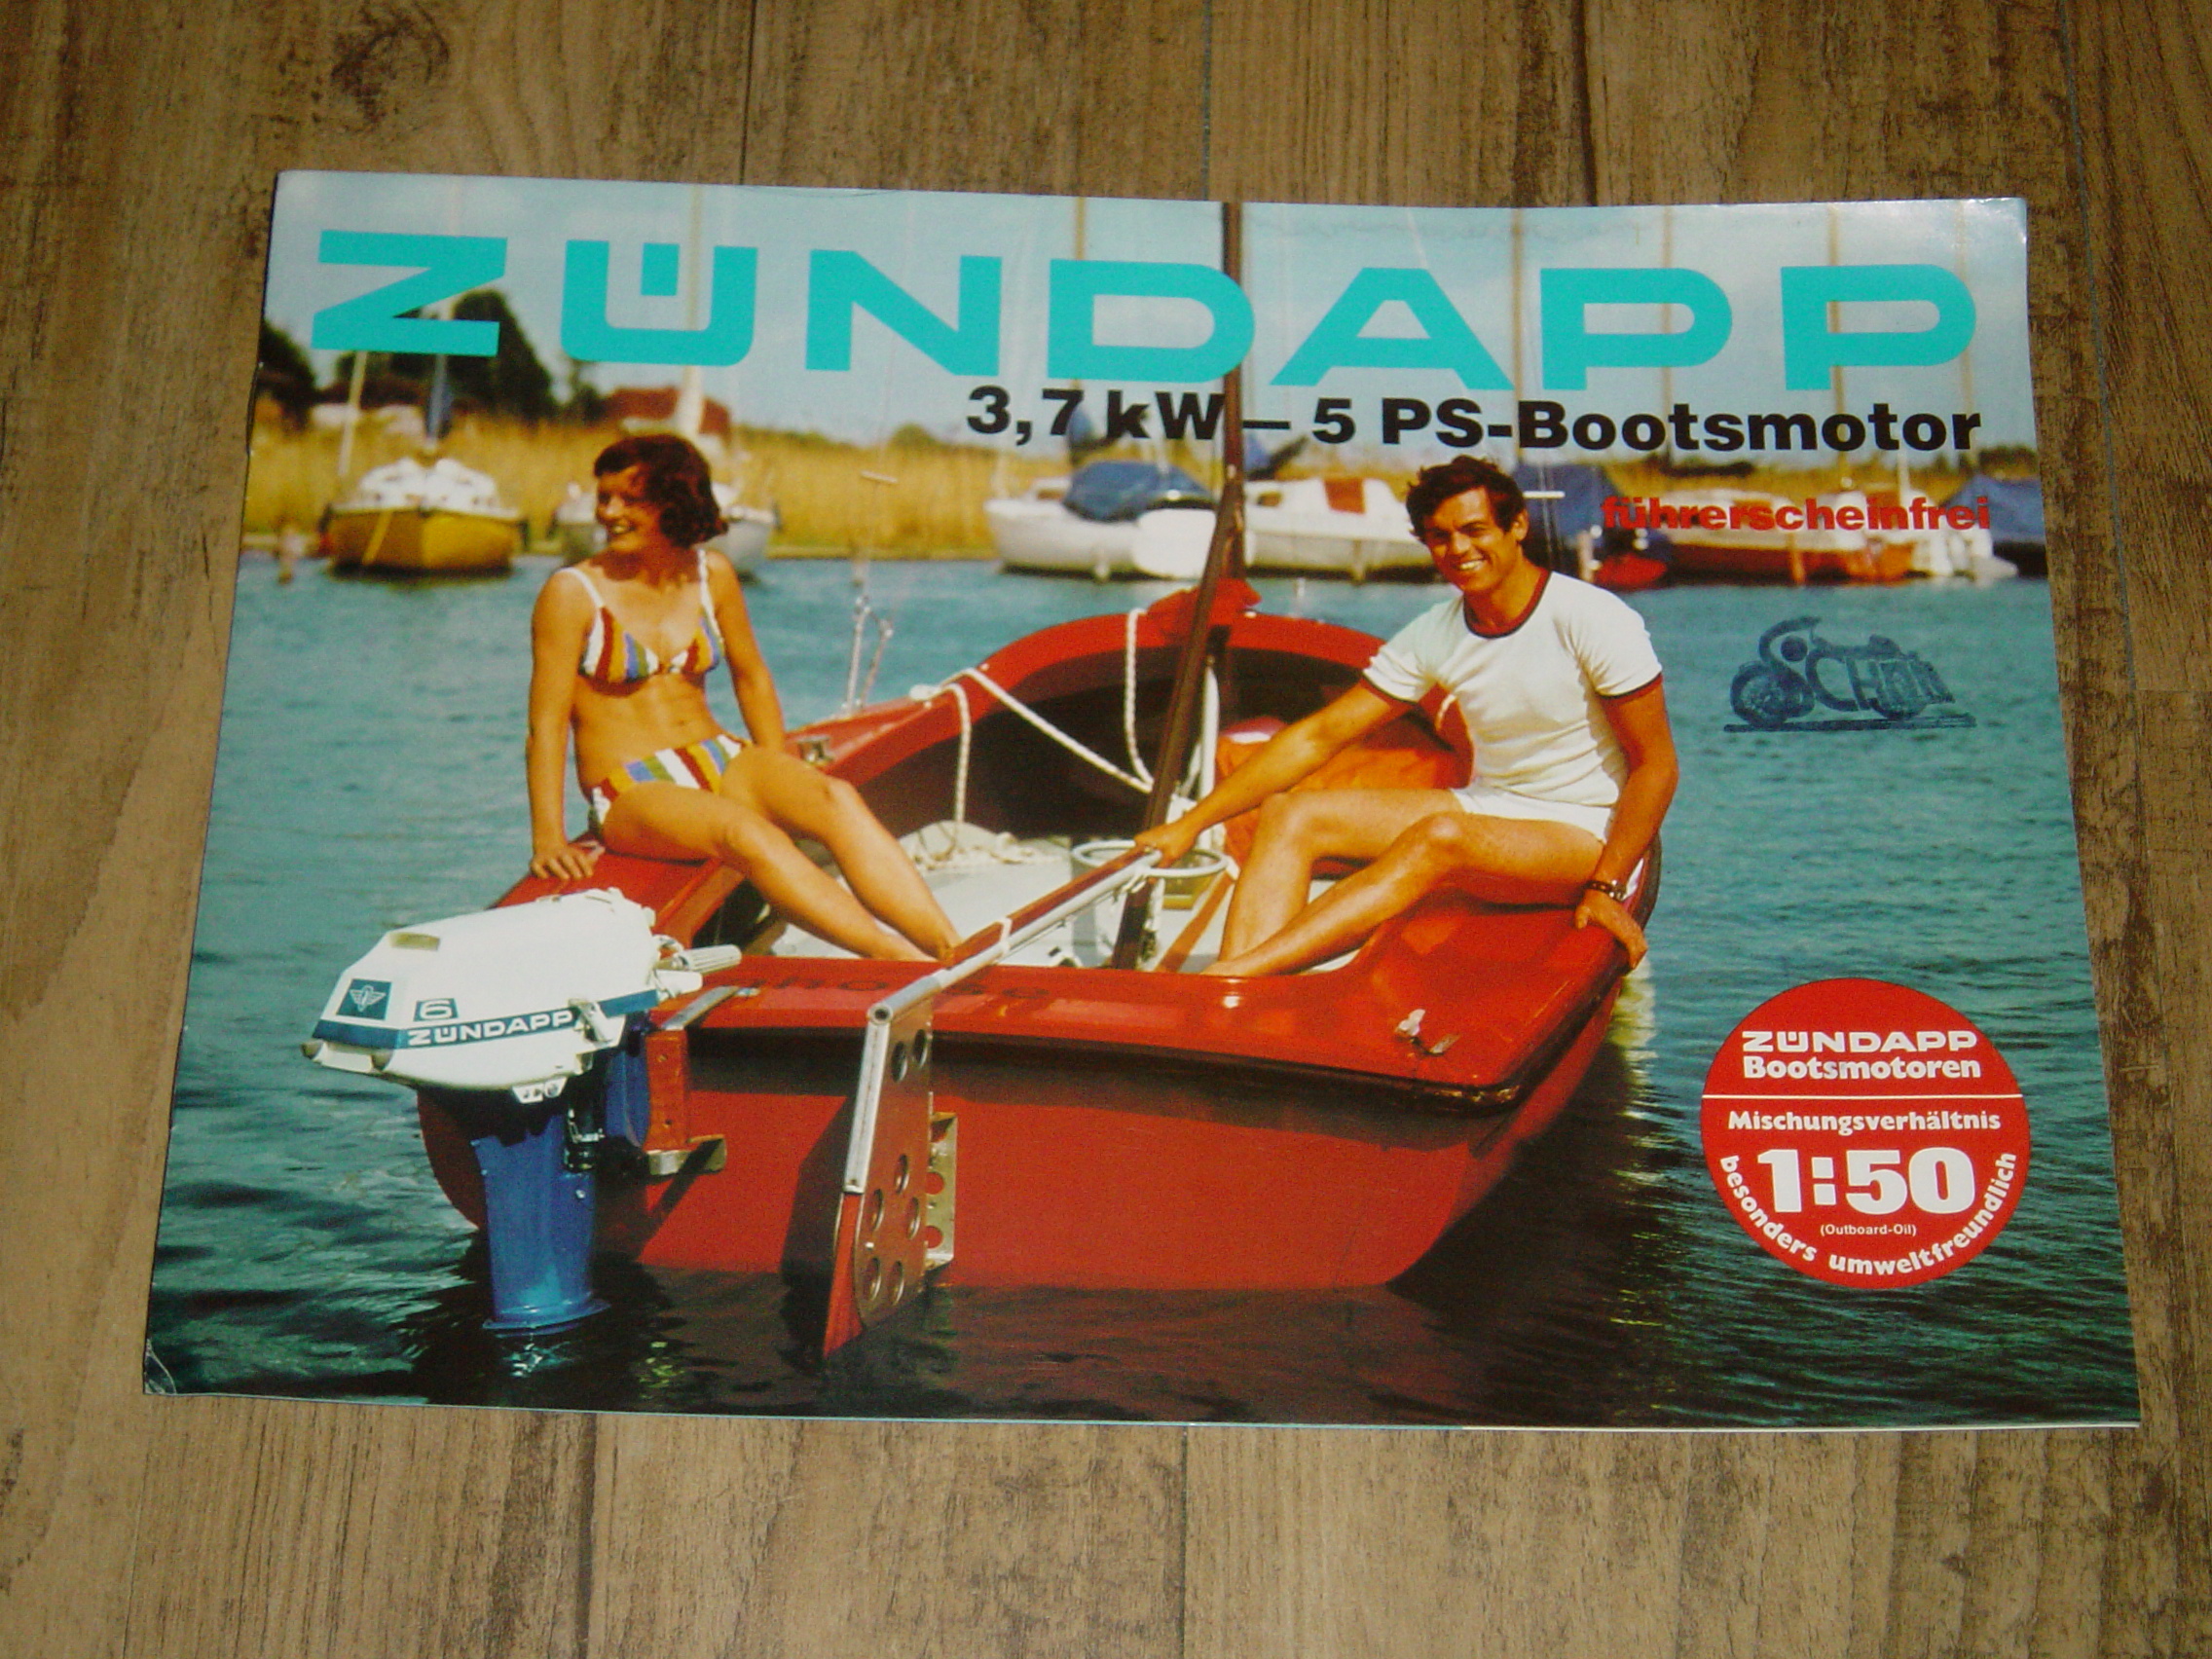 Promotional brochure D - Outboard motor model 304 3,7KW-5 PS